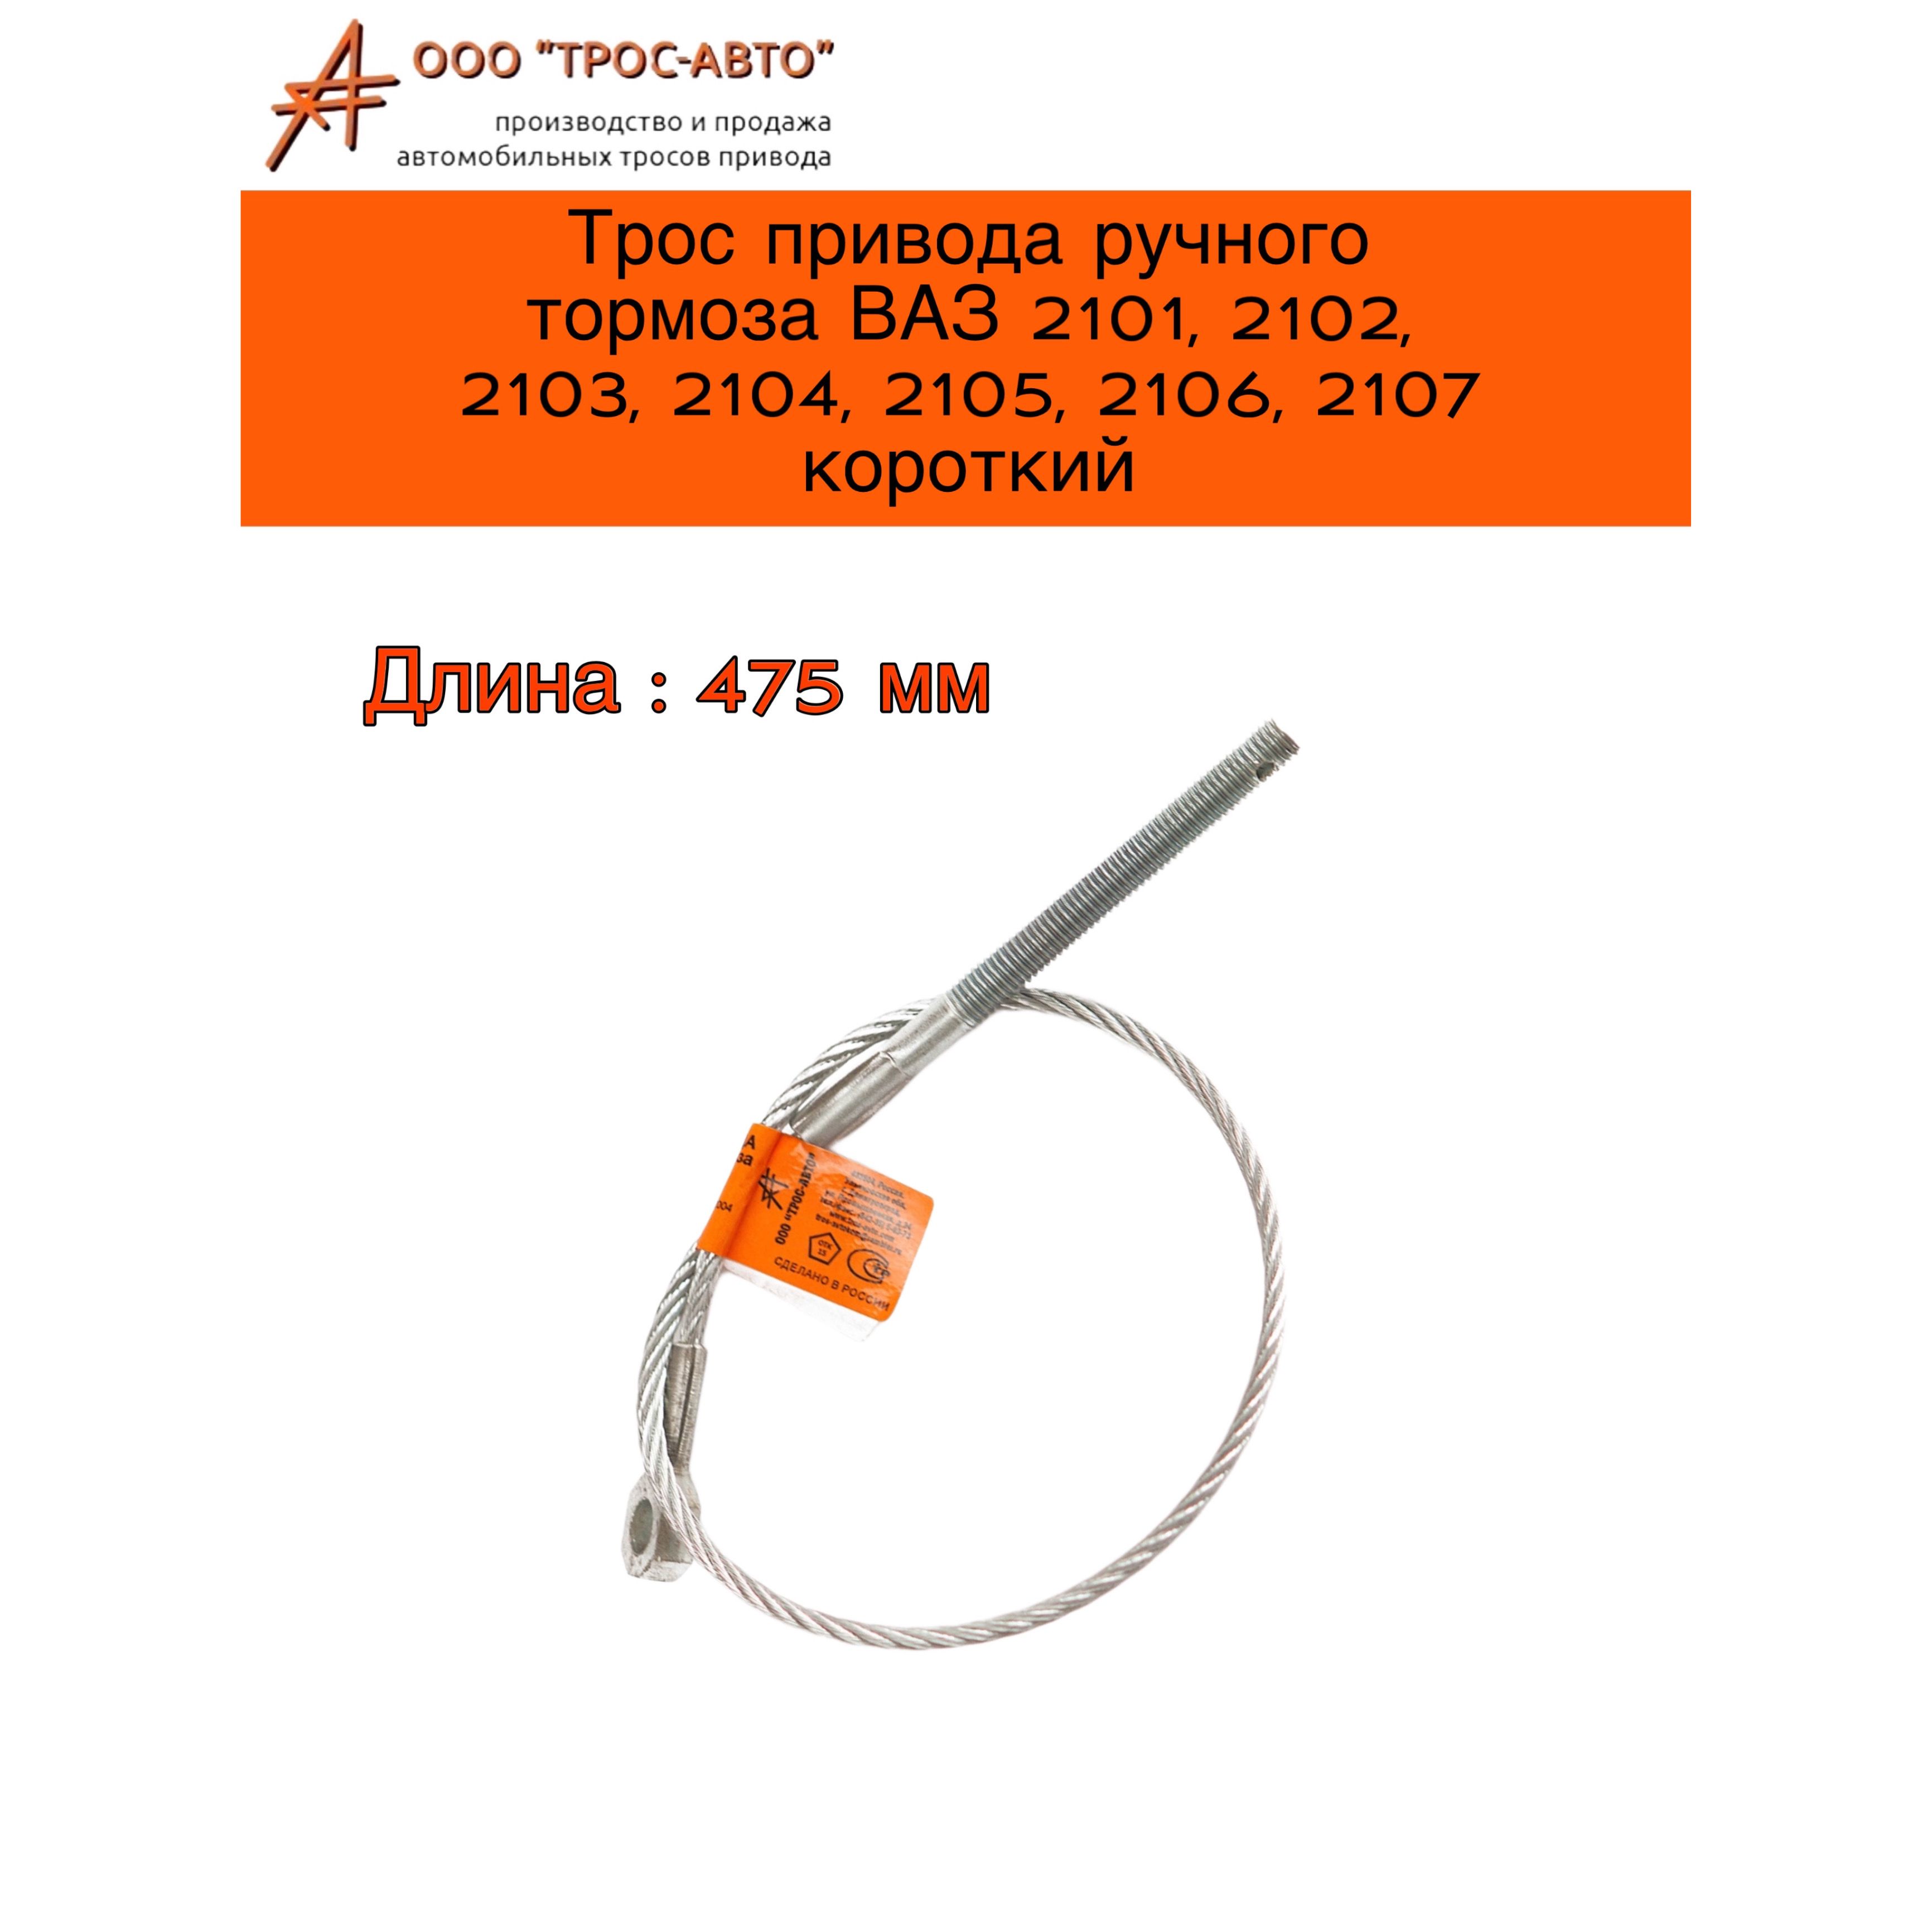 ТросприводаручноготормозаВАЗ2101-2107короткий